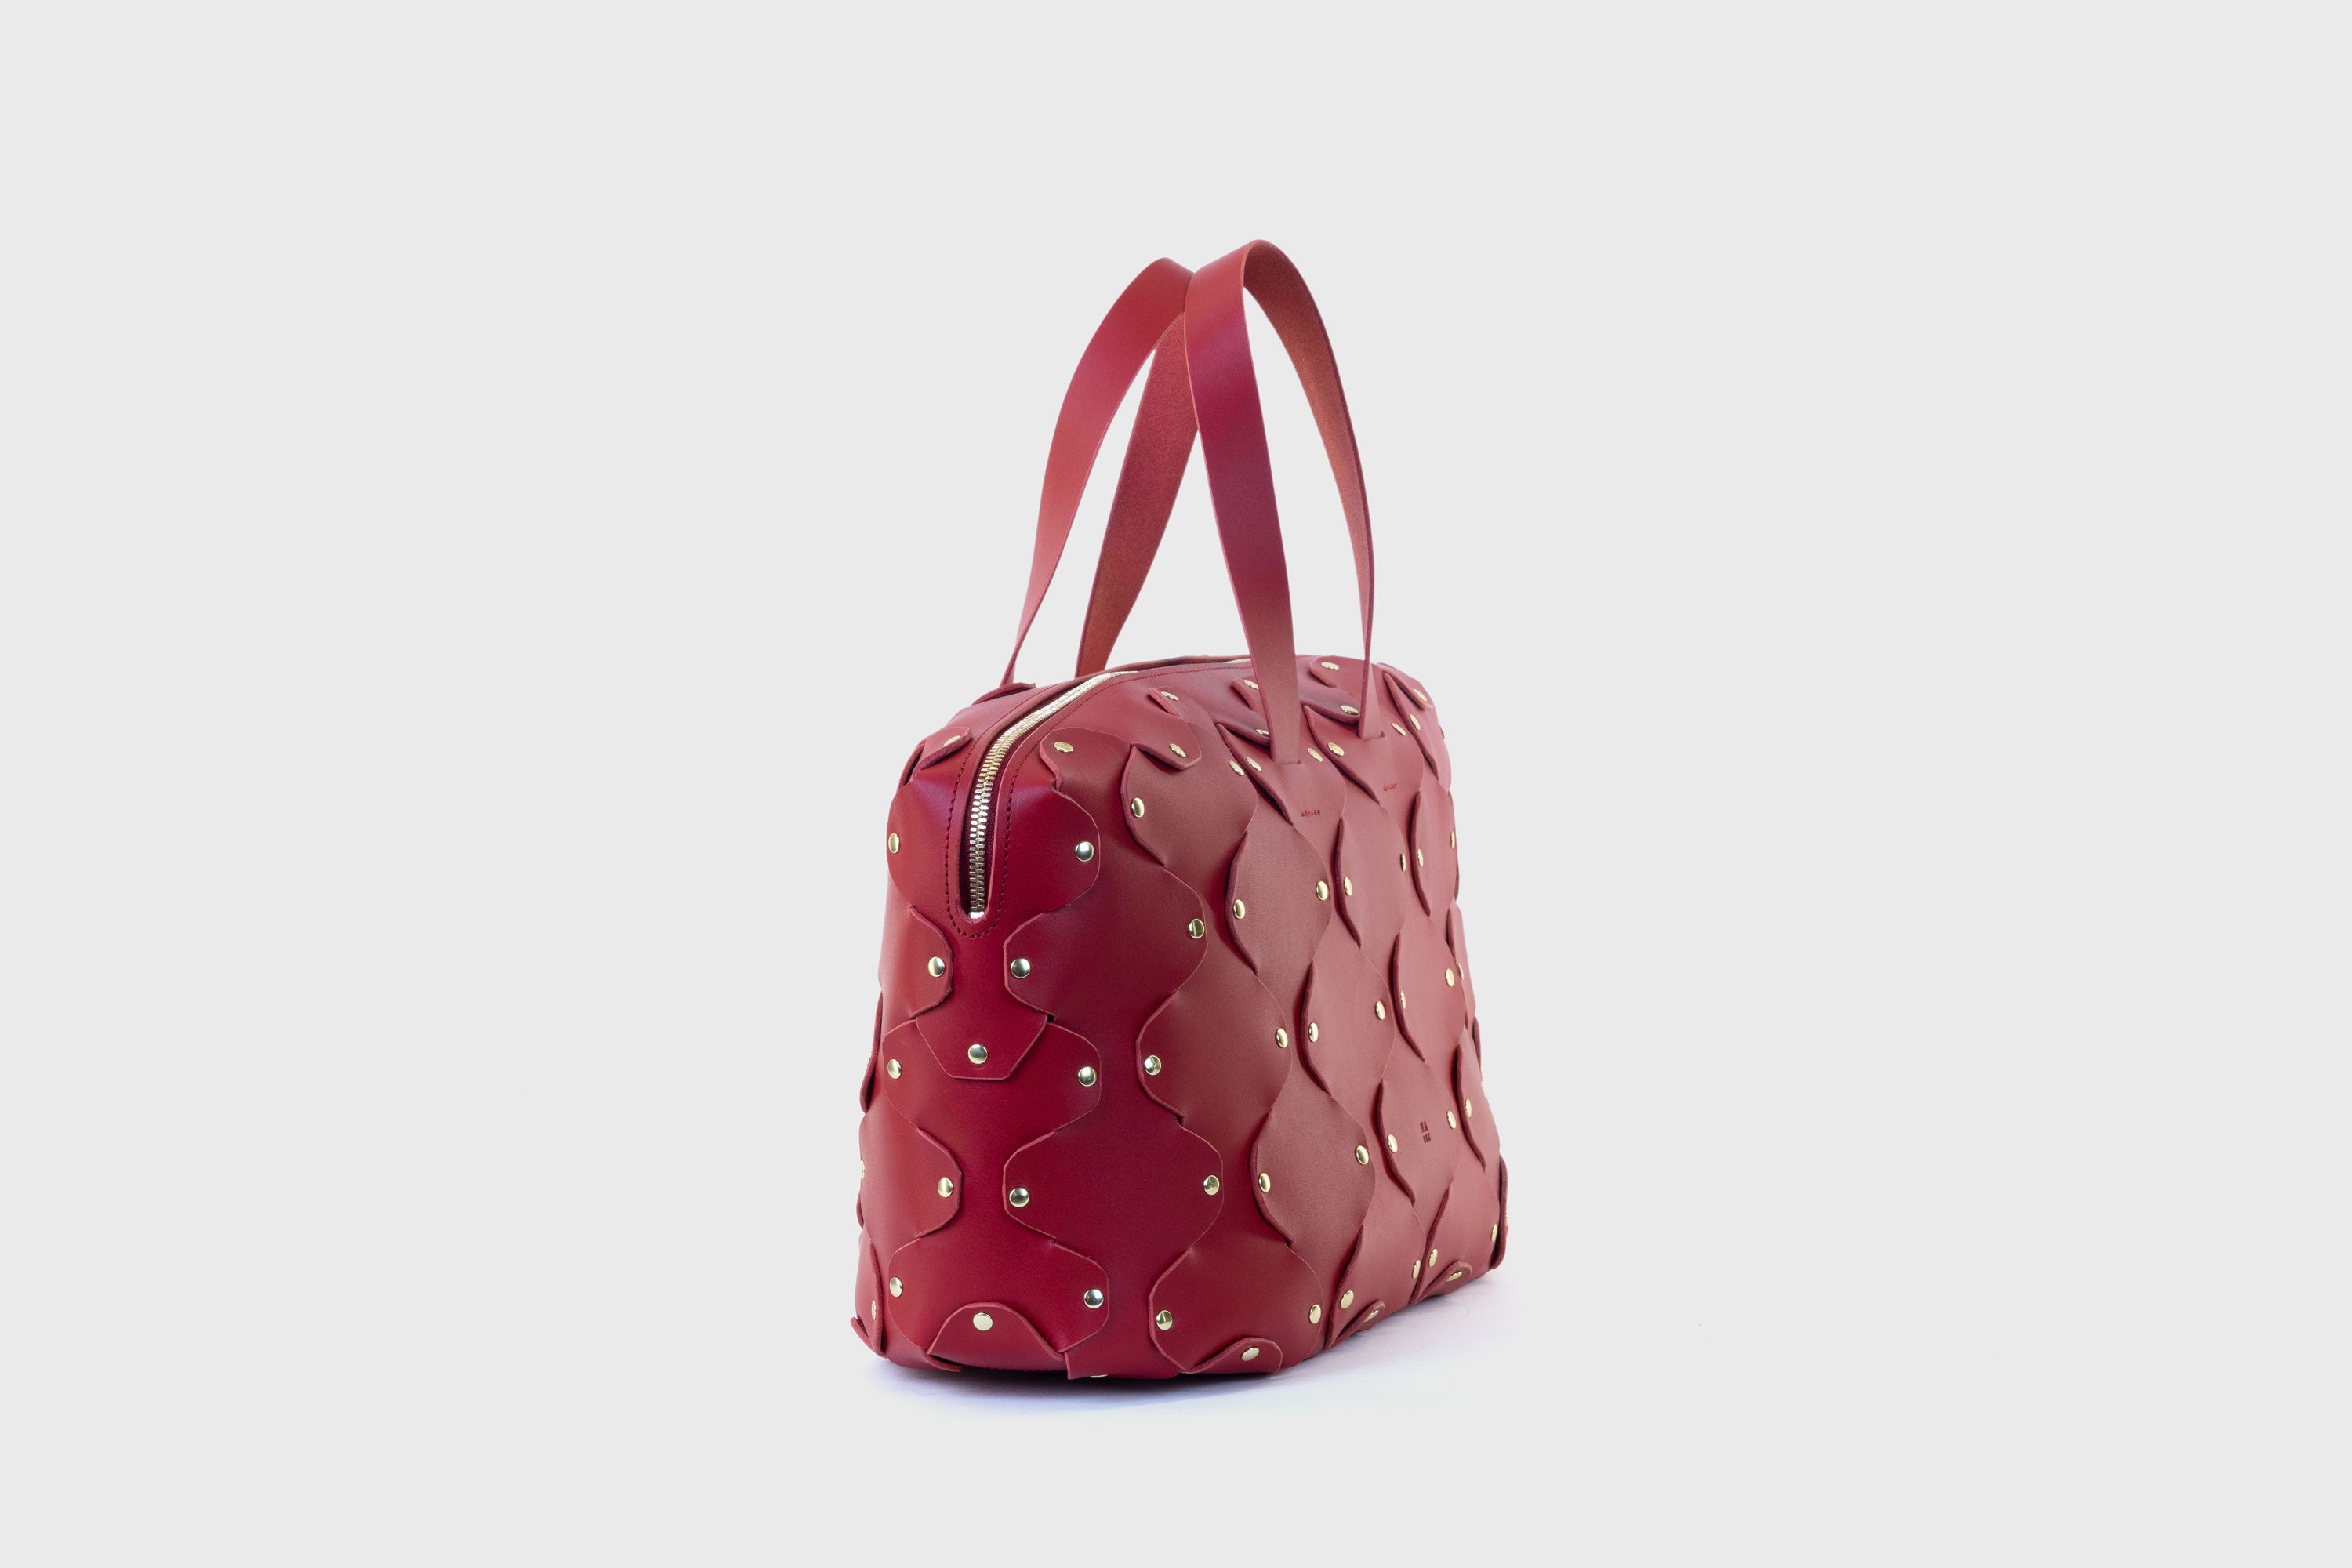 Nauto Leather Bag Red Vegetable Tanned Full Grain Spain Brass Rivets Design Minimalist Modern Big Travel Zipper Office Handbag Atelier Madre Manuel Dreesmann Barcelona